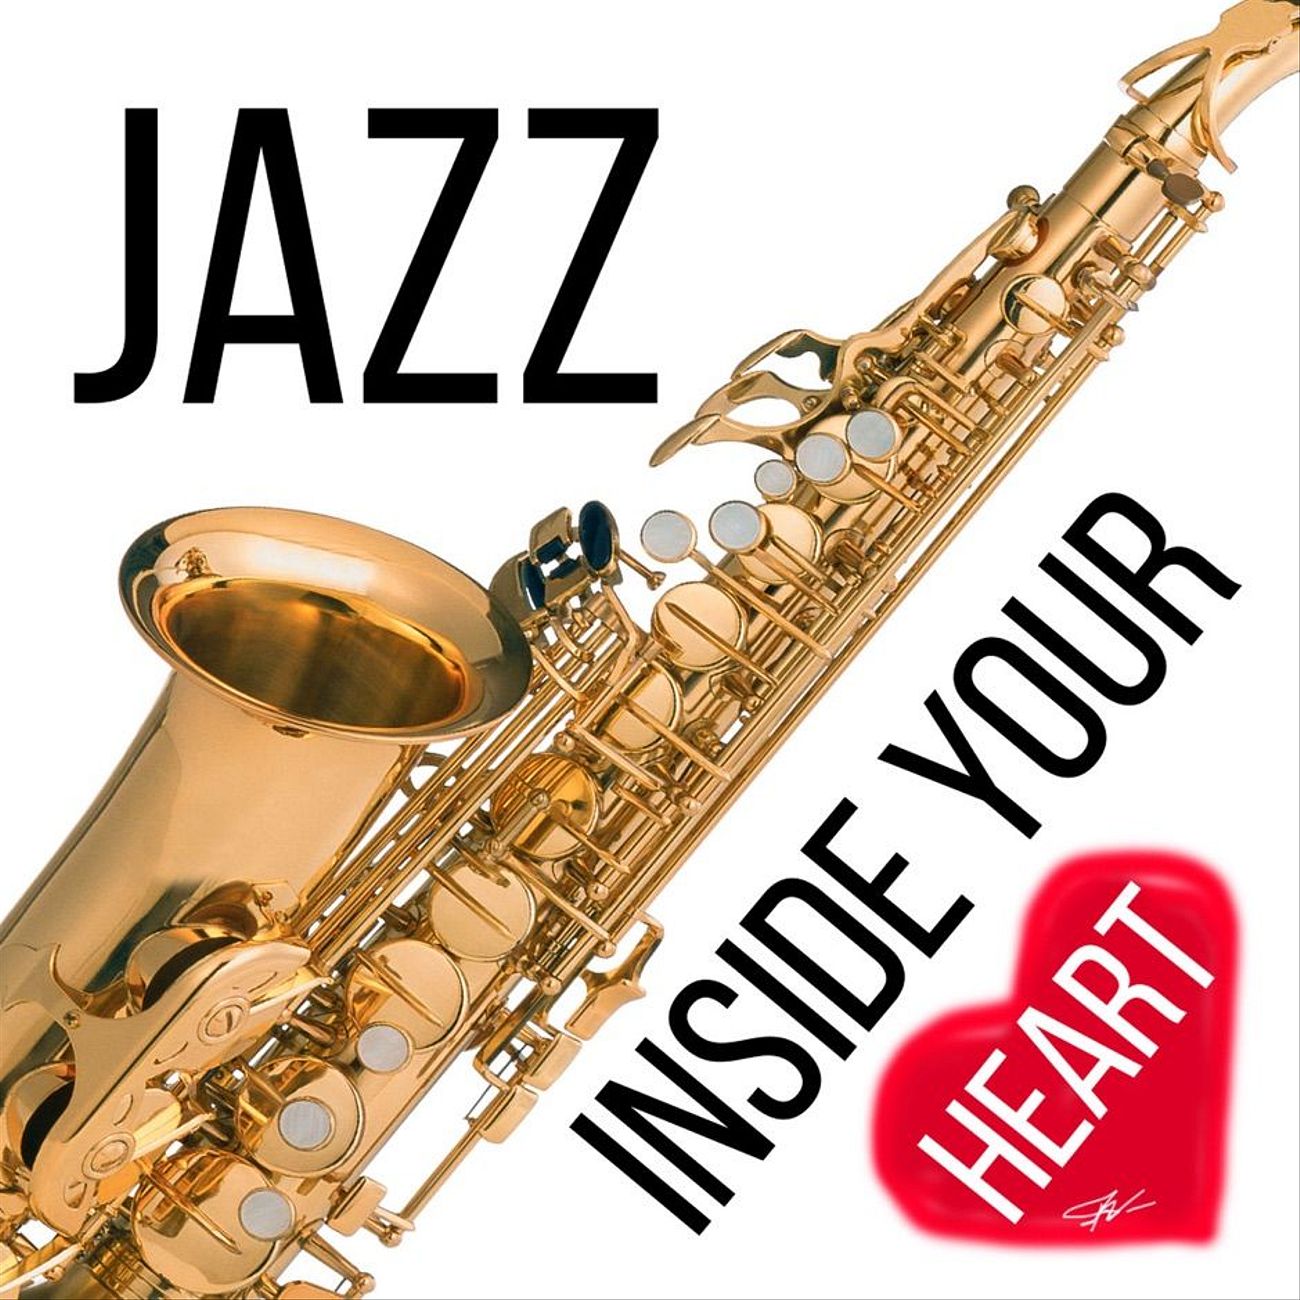 Jazz Inside your Heart - Джаз в твоём сердце!